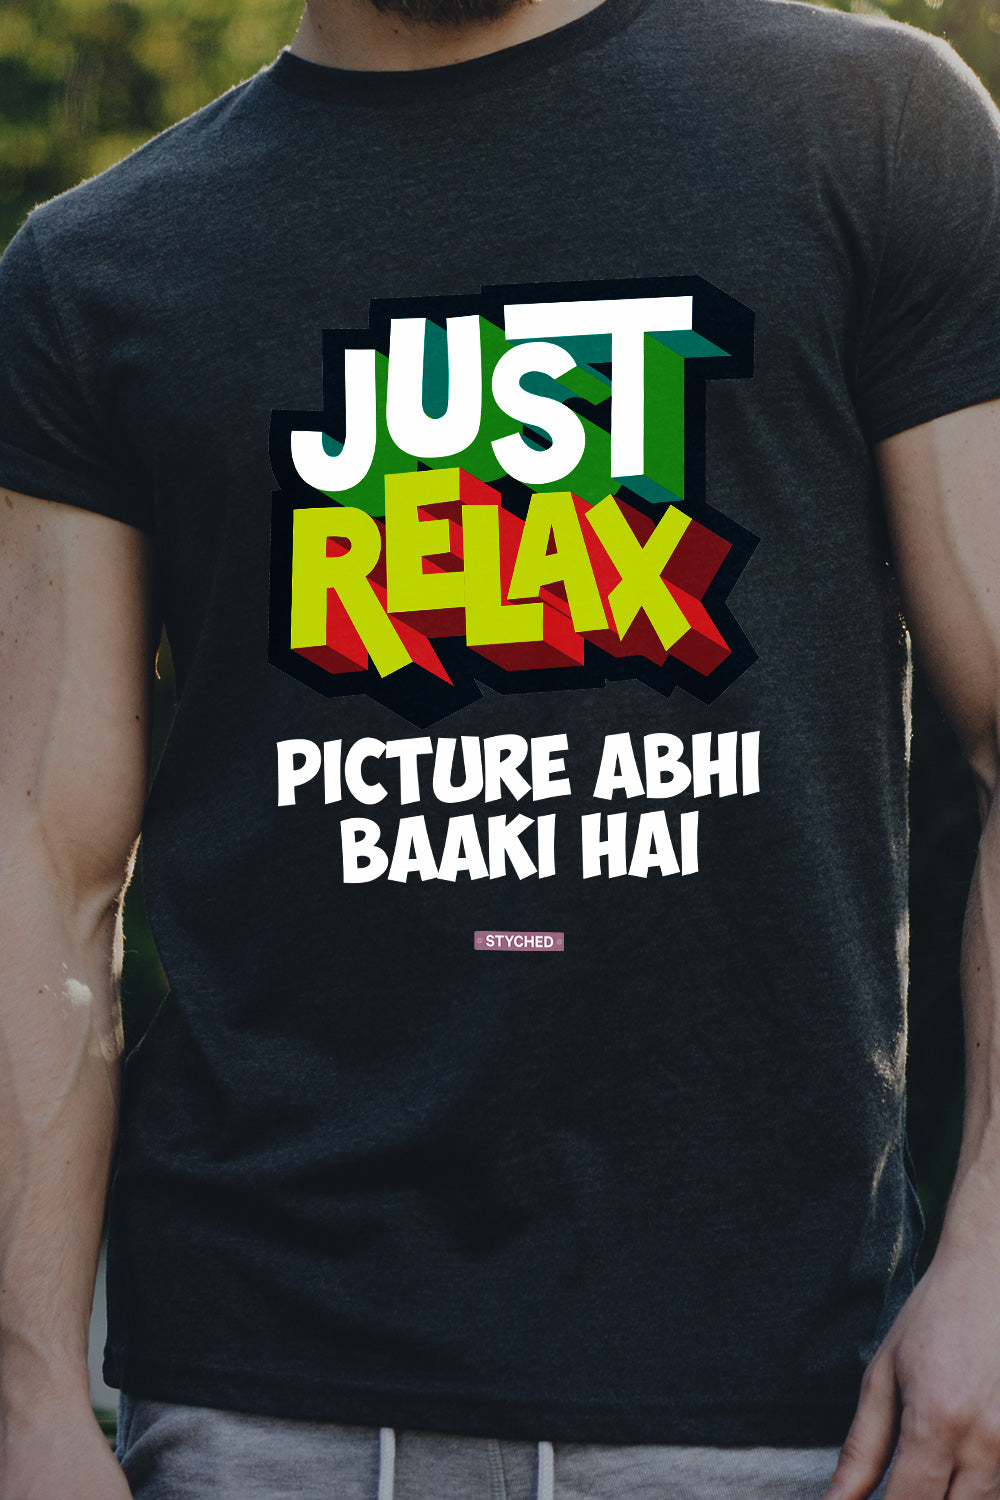 Just Relax - Picture abhi baaki hai - Graphic TShirt